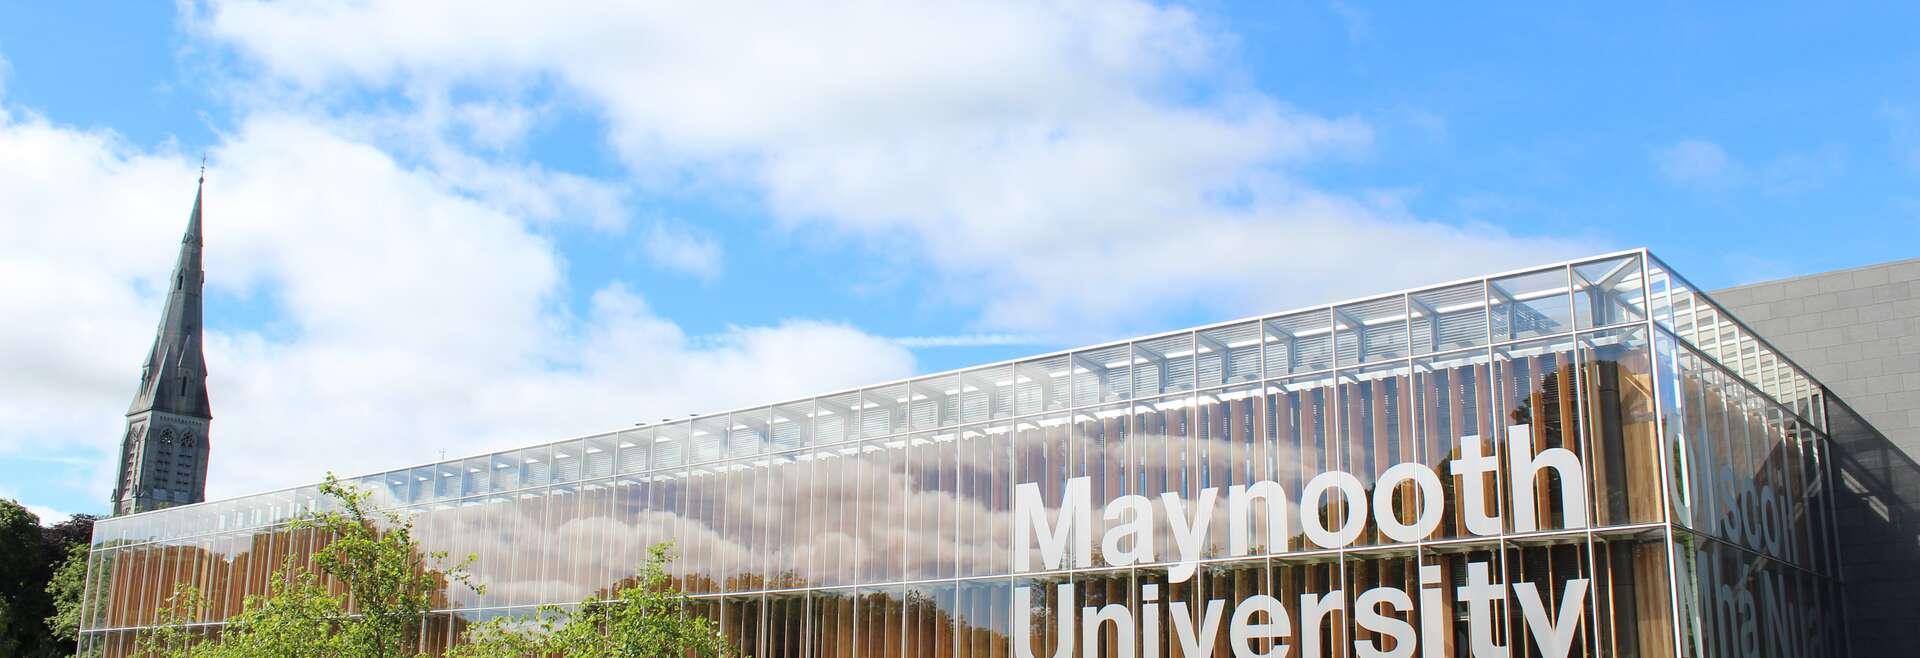 Sprachaufenthalt Irland, Dublin - Apollo Language Centre Maynooth University - Schule